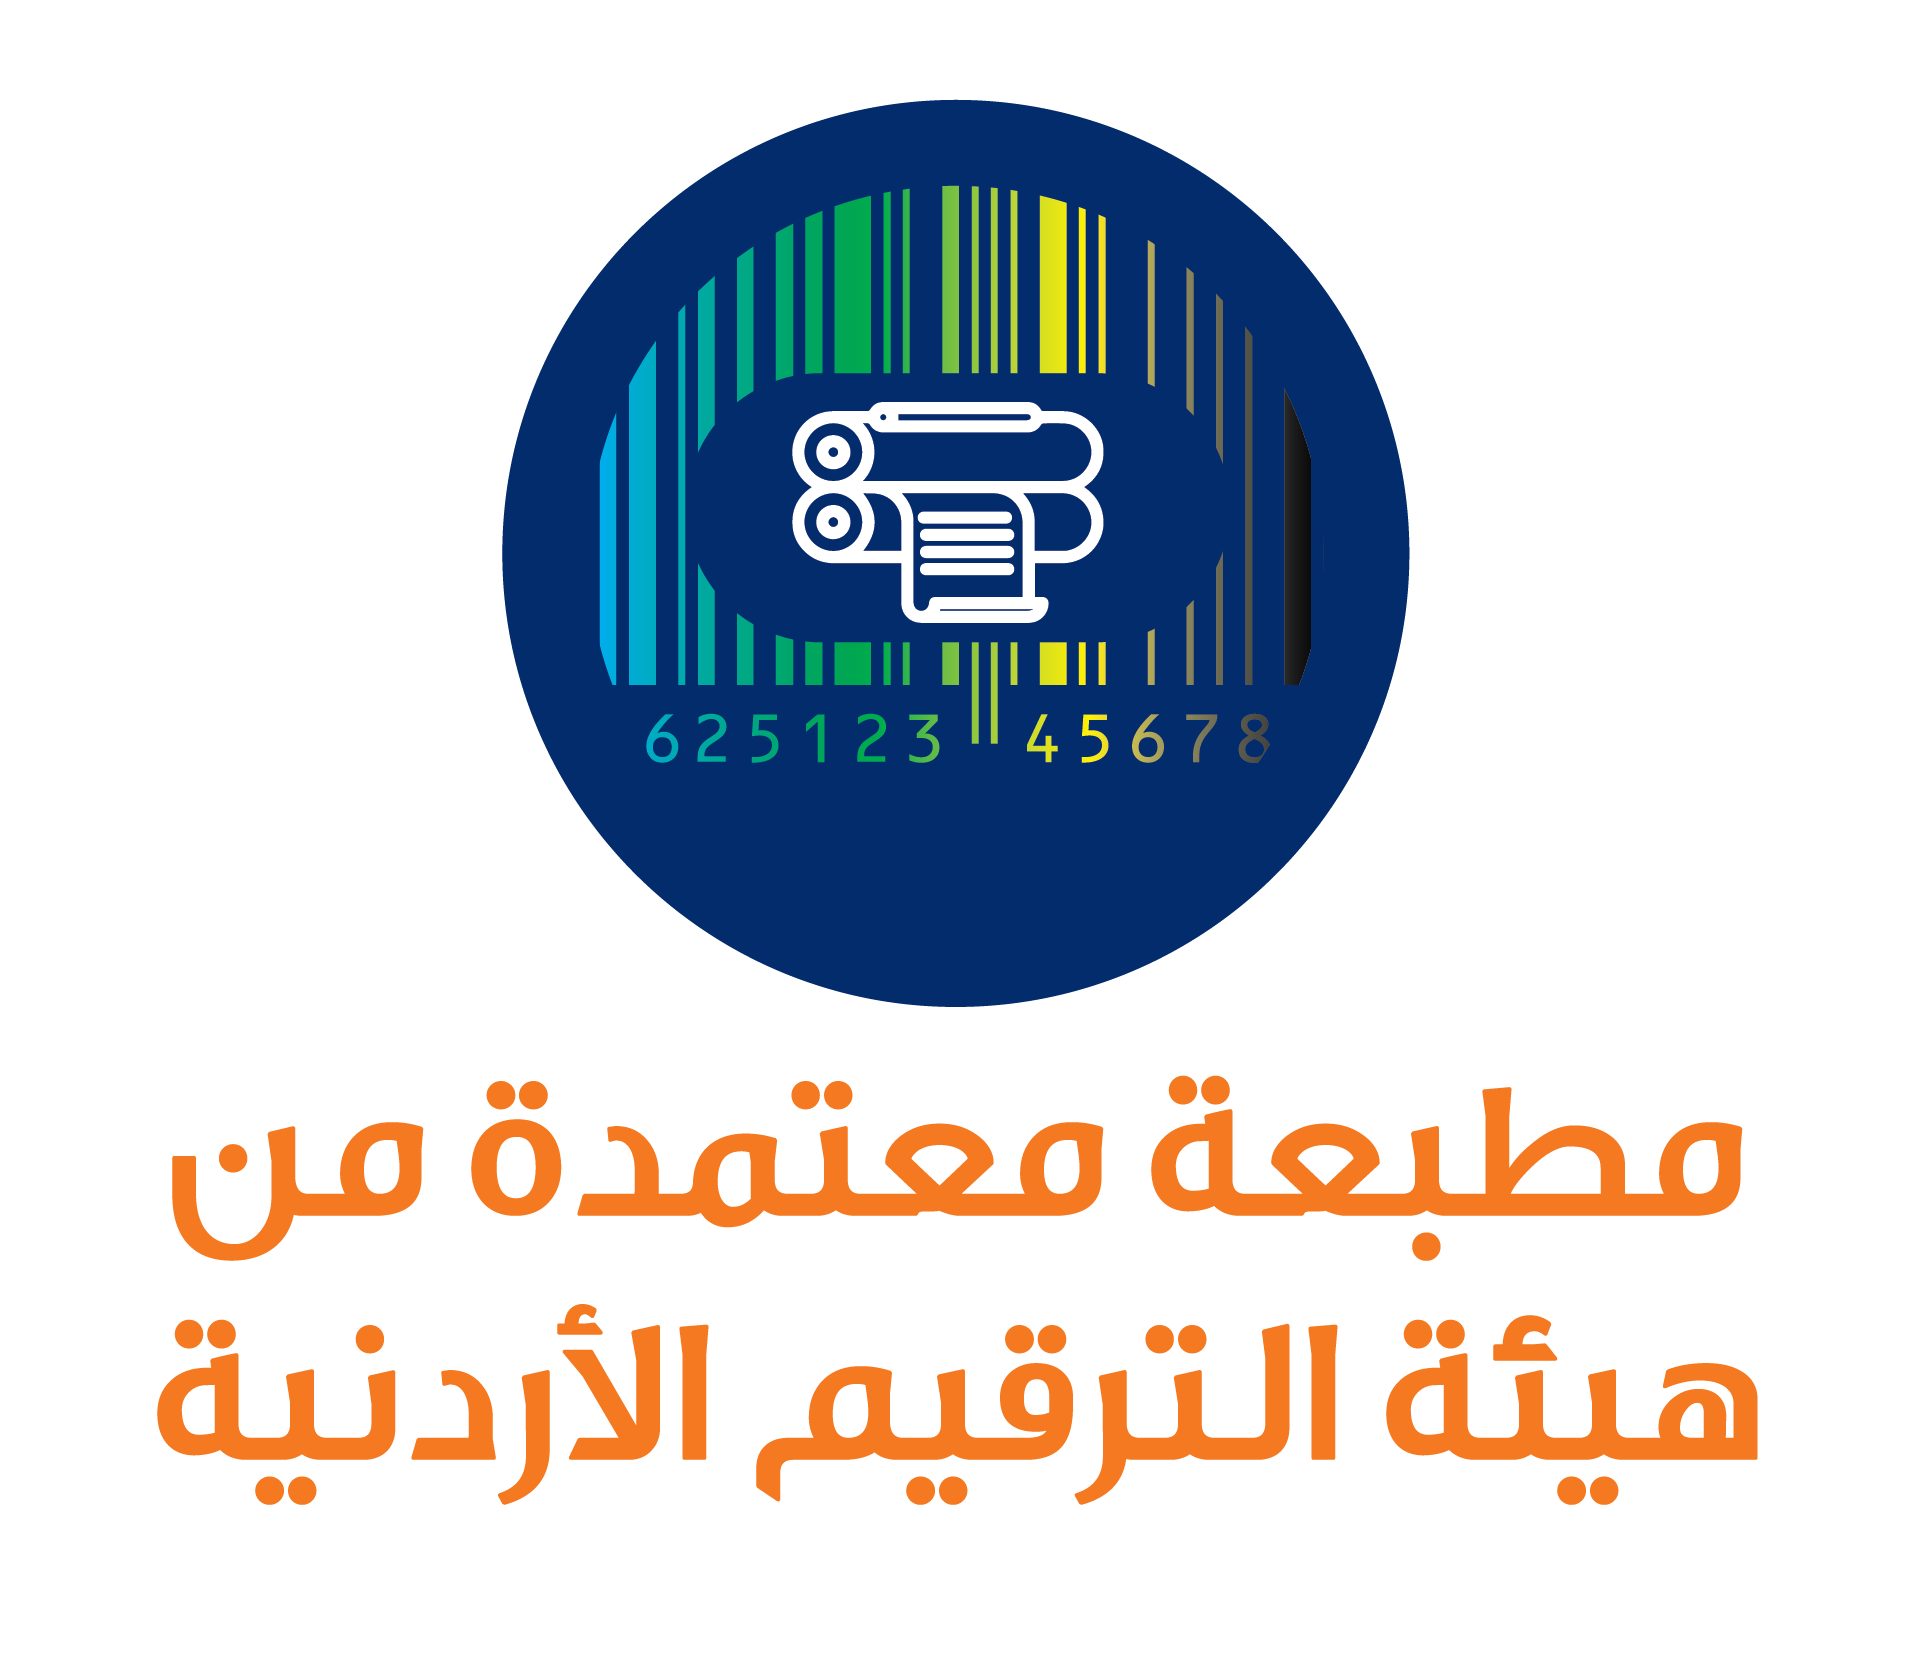 Al Emteyaz label printing